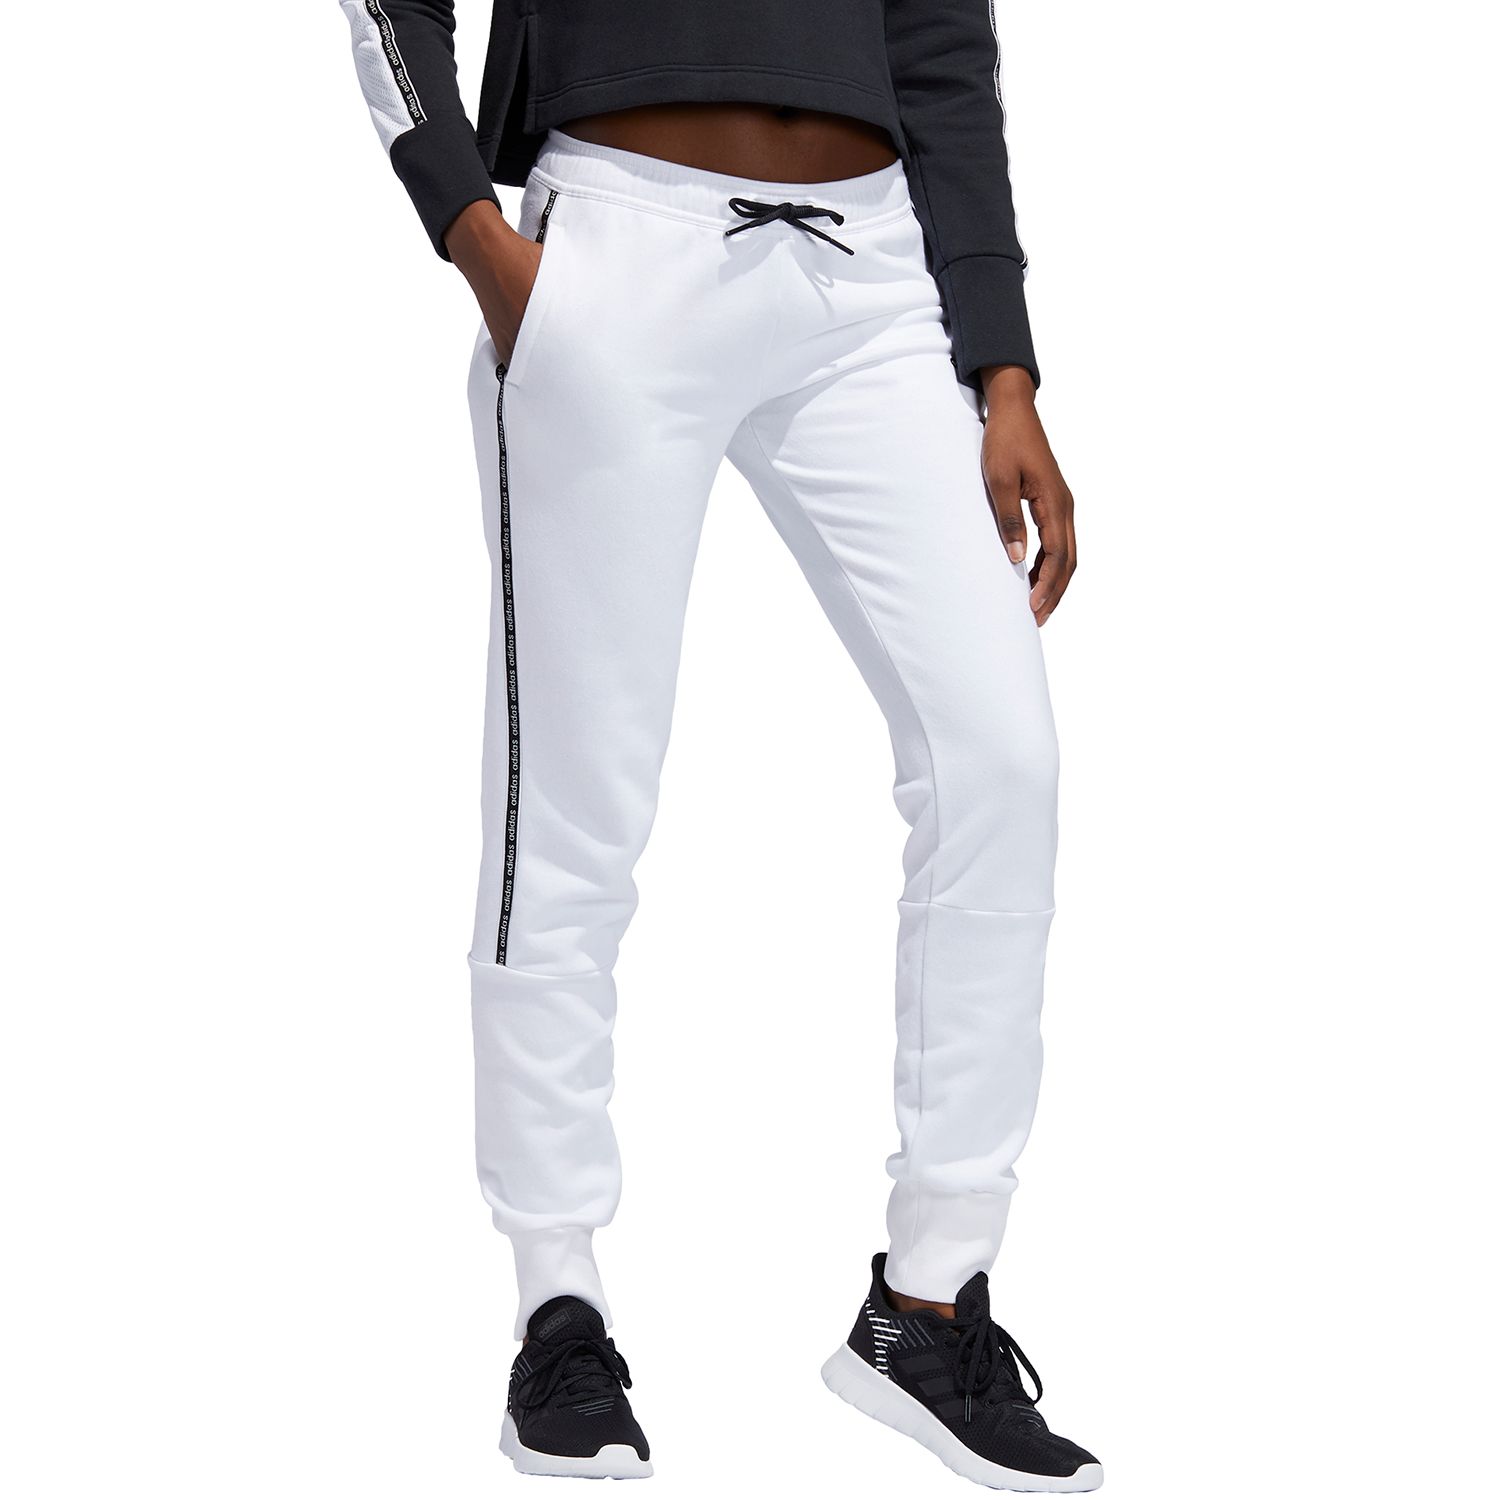 adidas sweatpants with zipper pockets